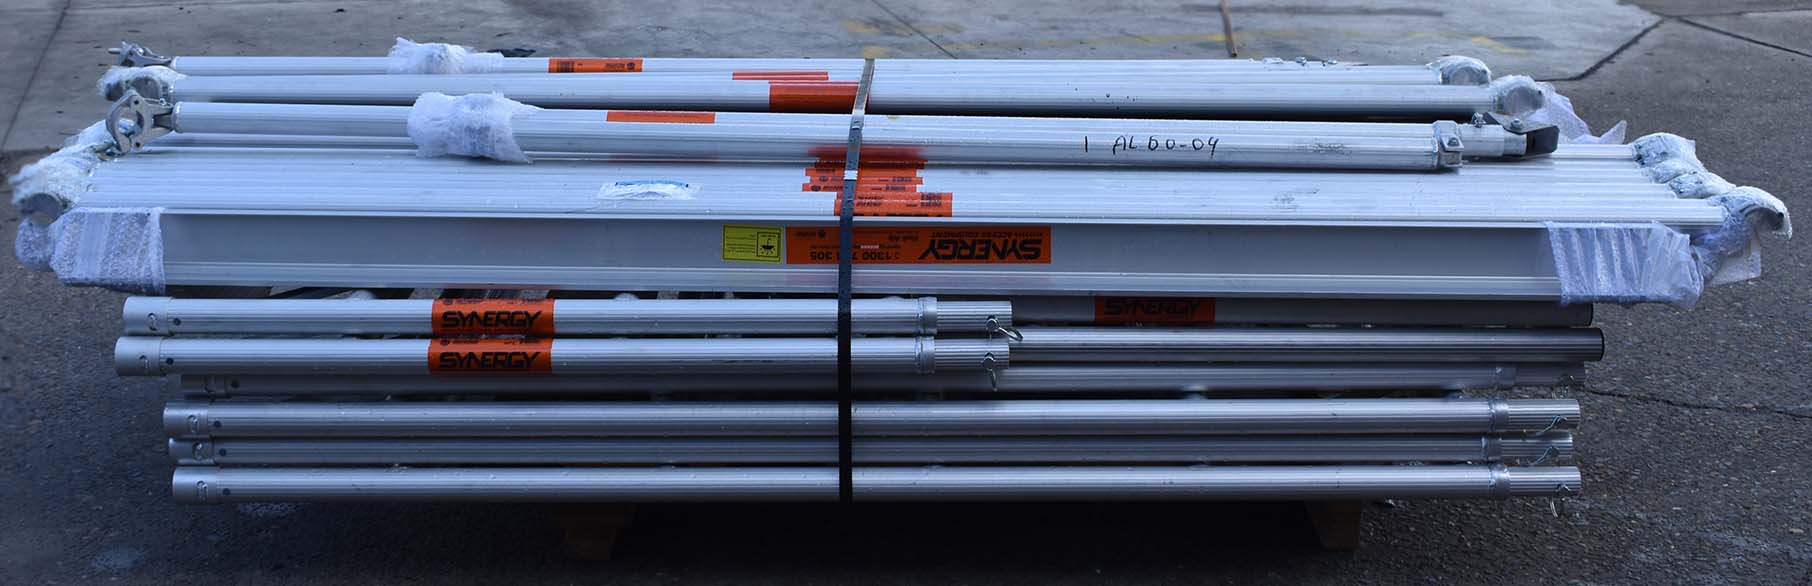 Aluminium Mobile Narrow Scaffold 1.8m - 2.2m (Platform Height